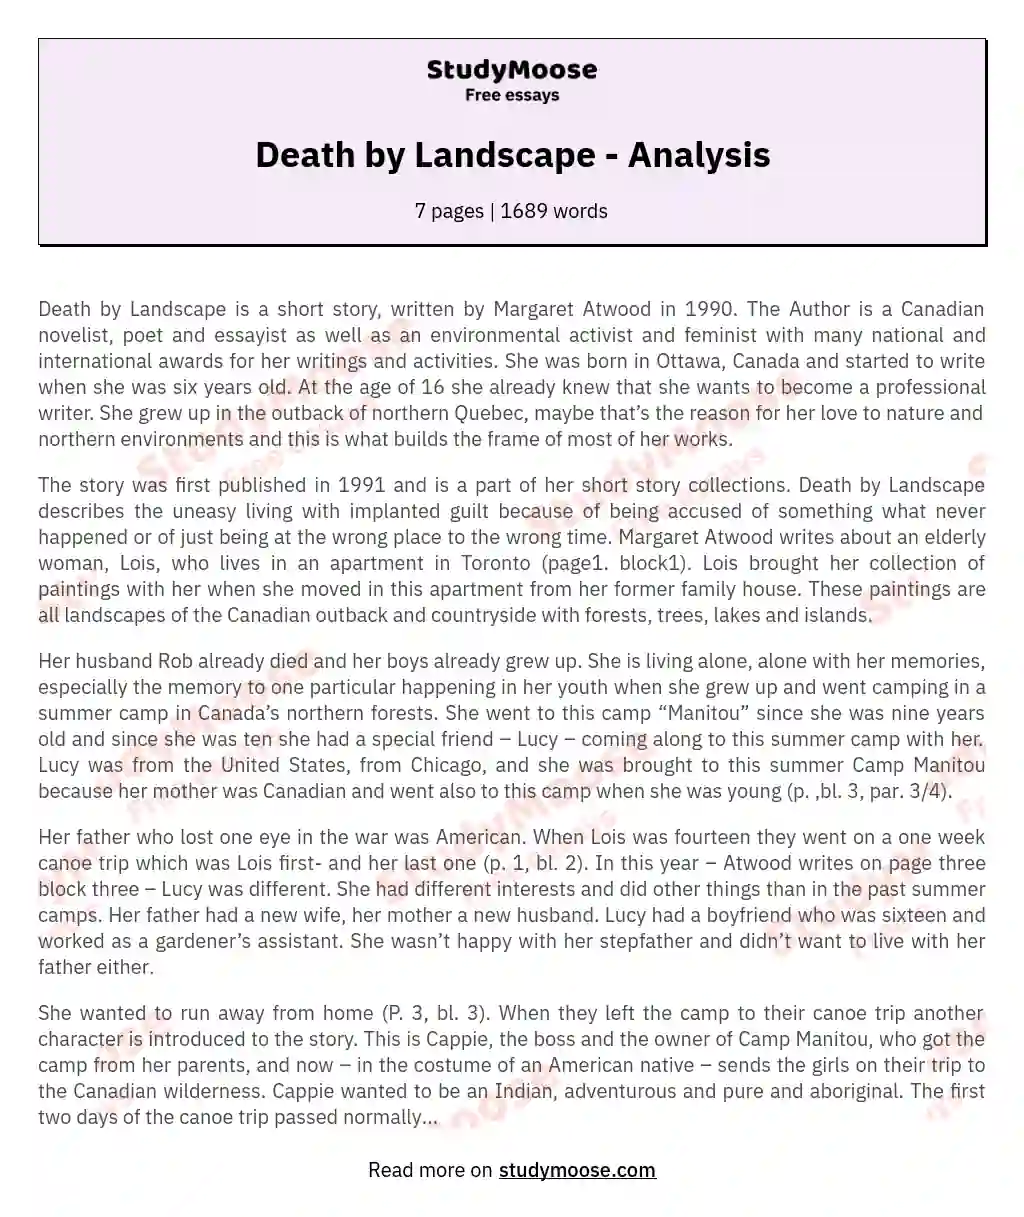 Death by Landscape - Analysis essay